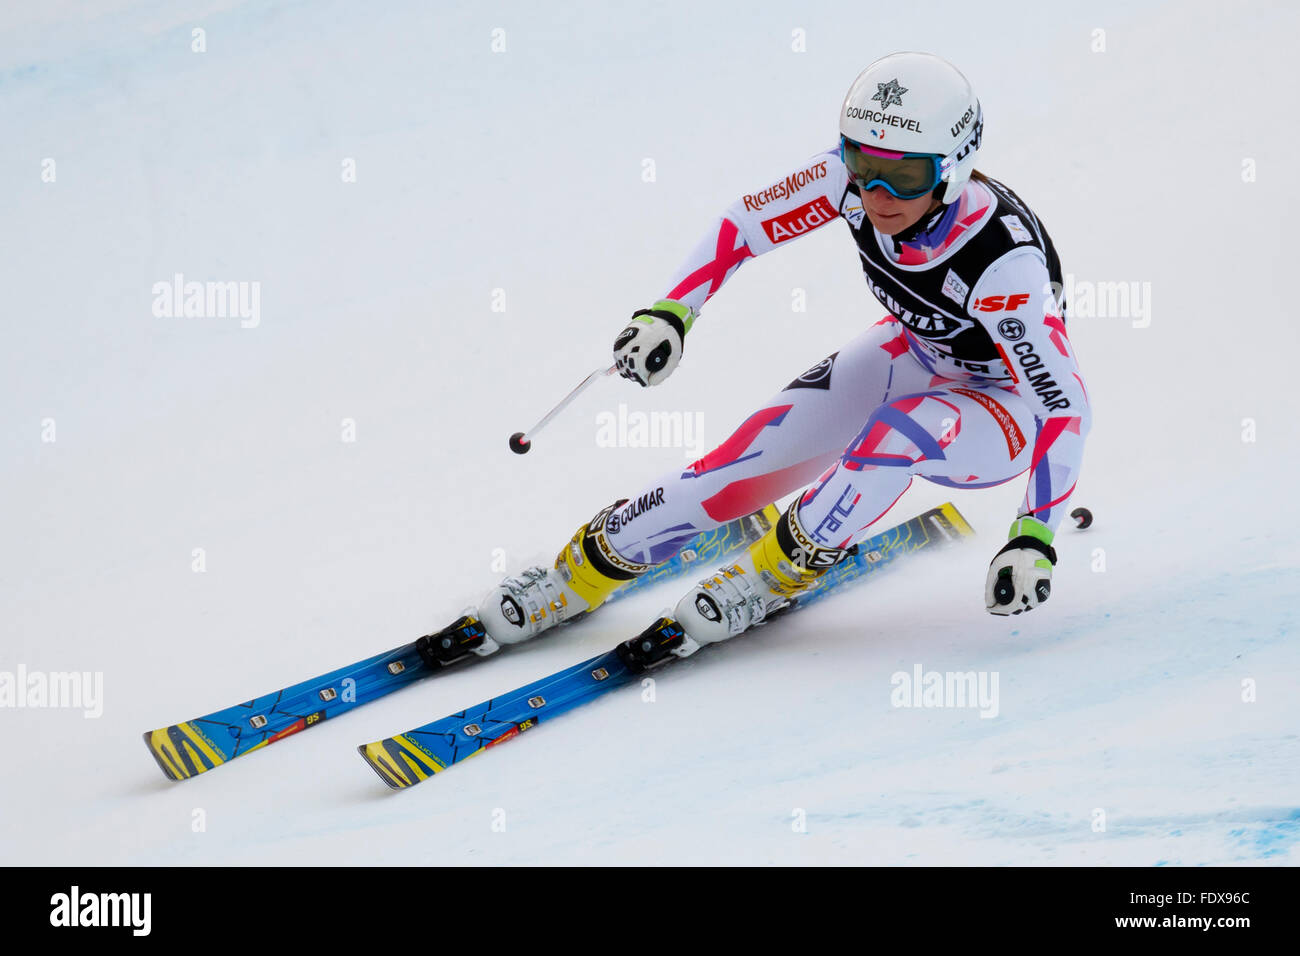 Noemie LARROUY en Audi FIS Alpine Ski World Cup Women's Super G Foto de stock